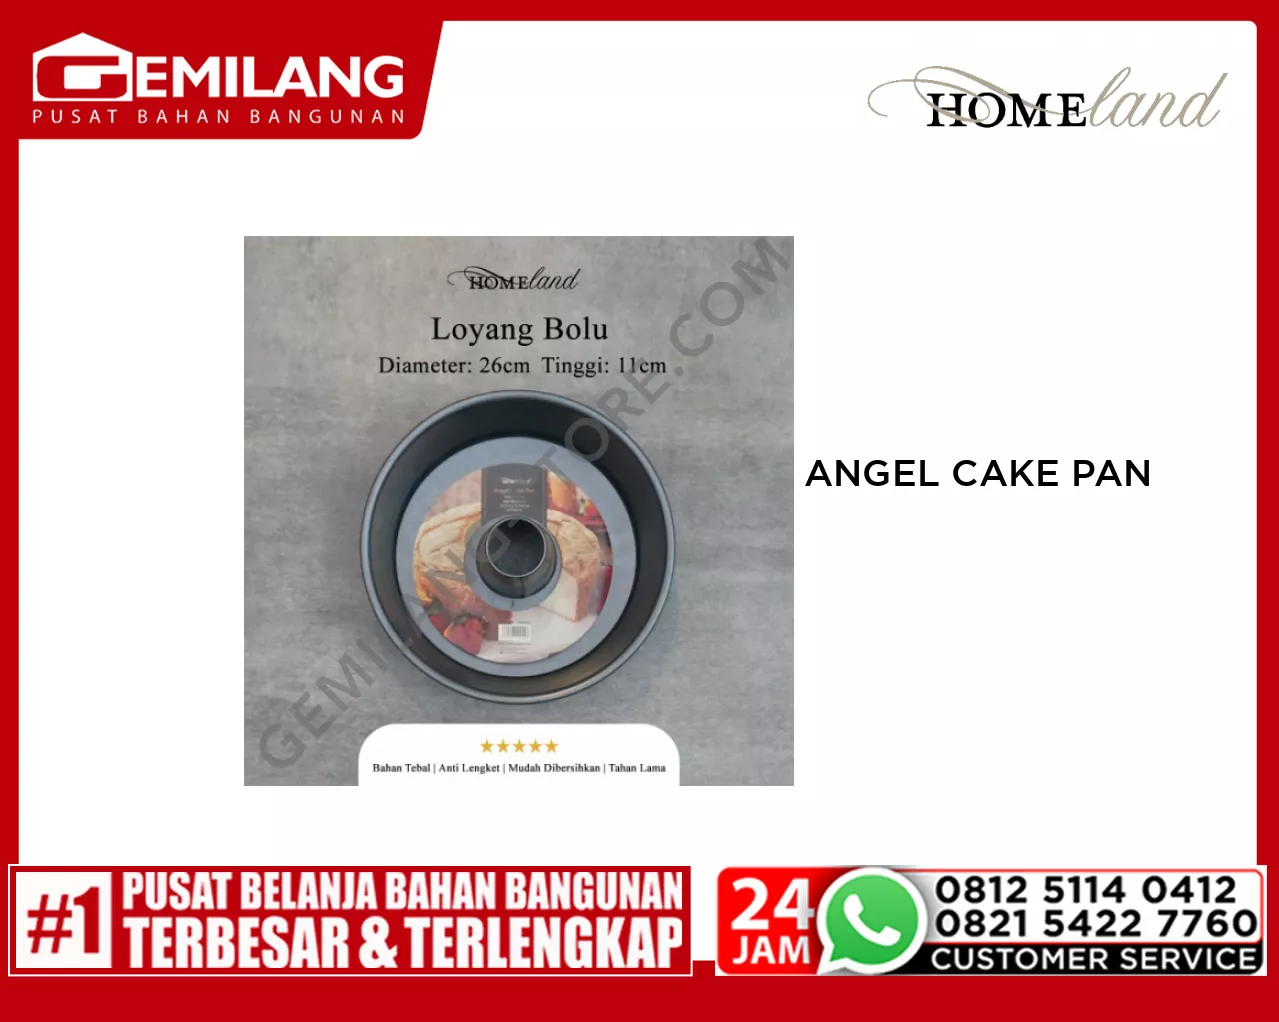 HOMELAND ANGEL CAKE PAN GREY